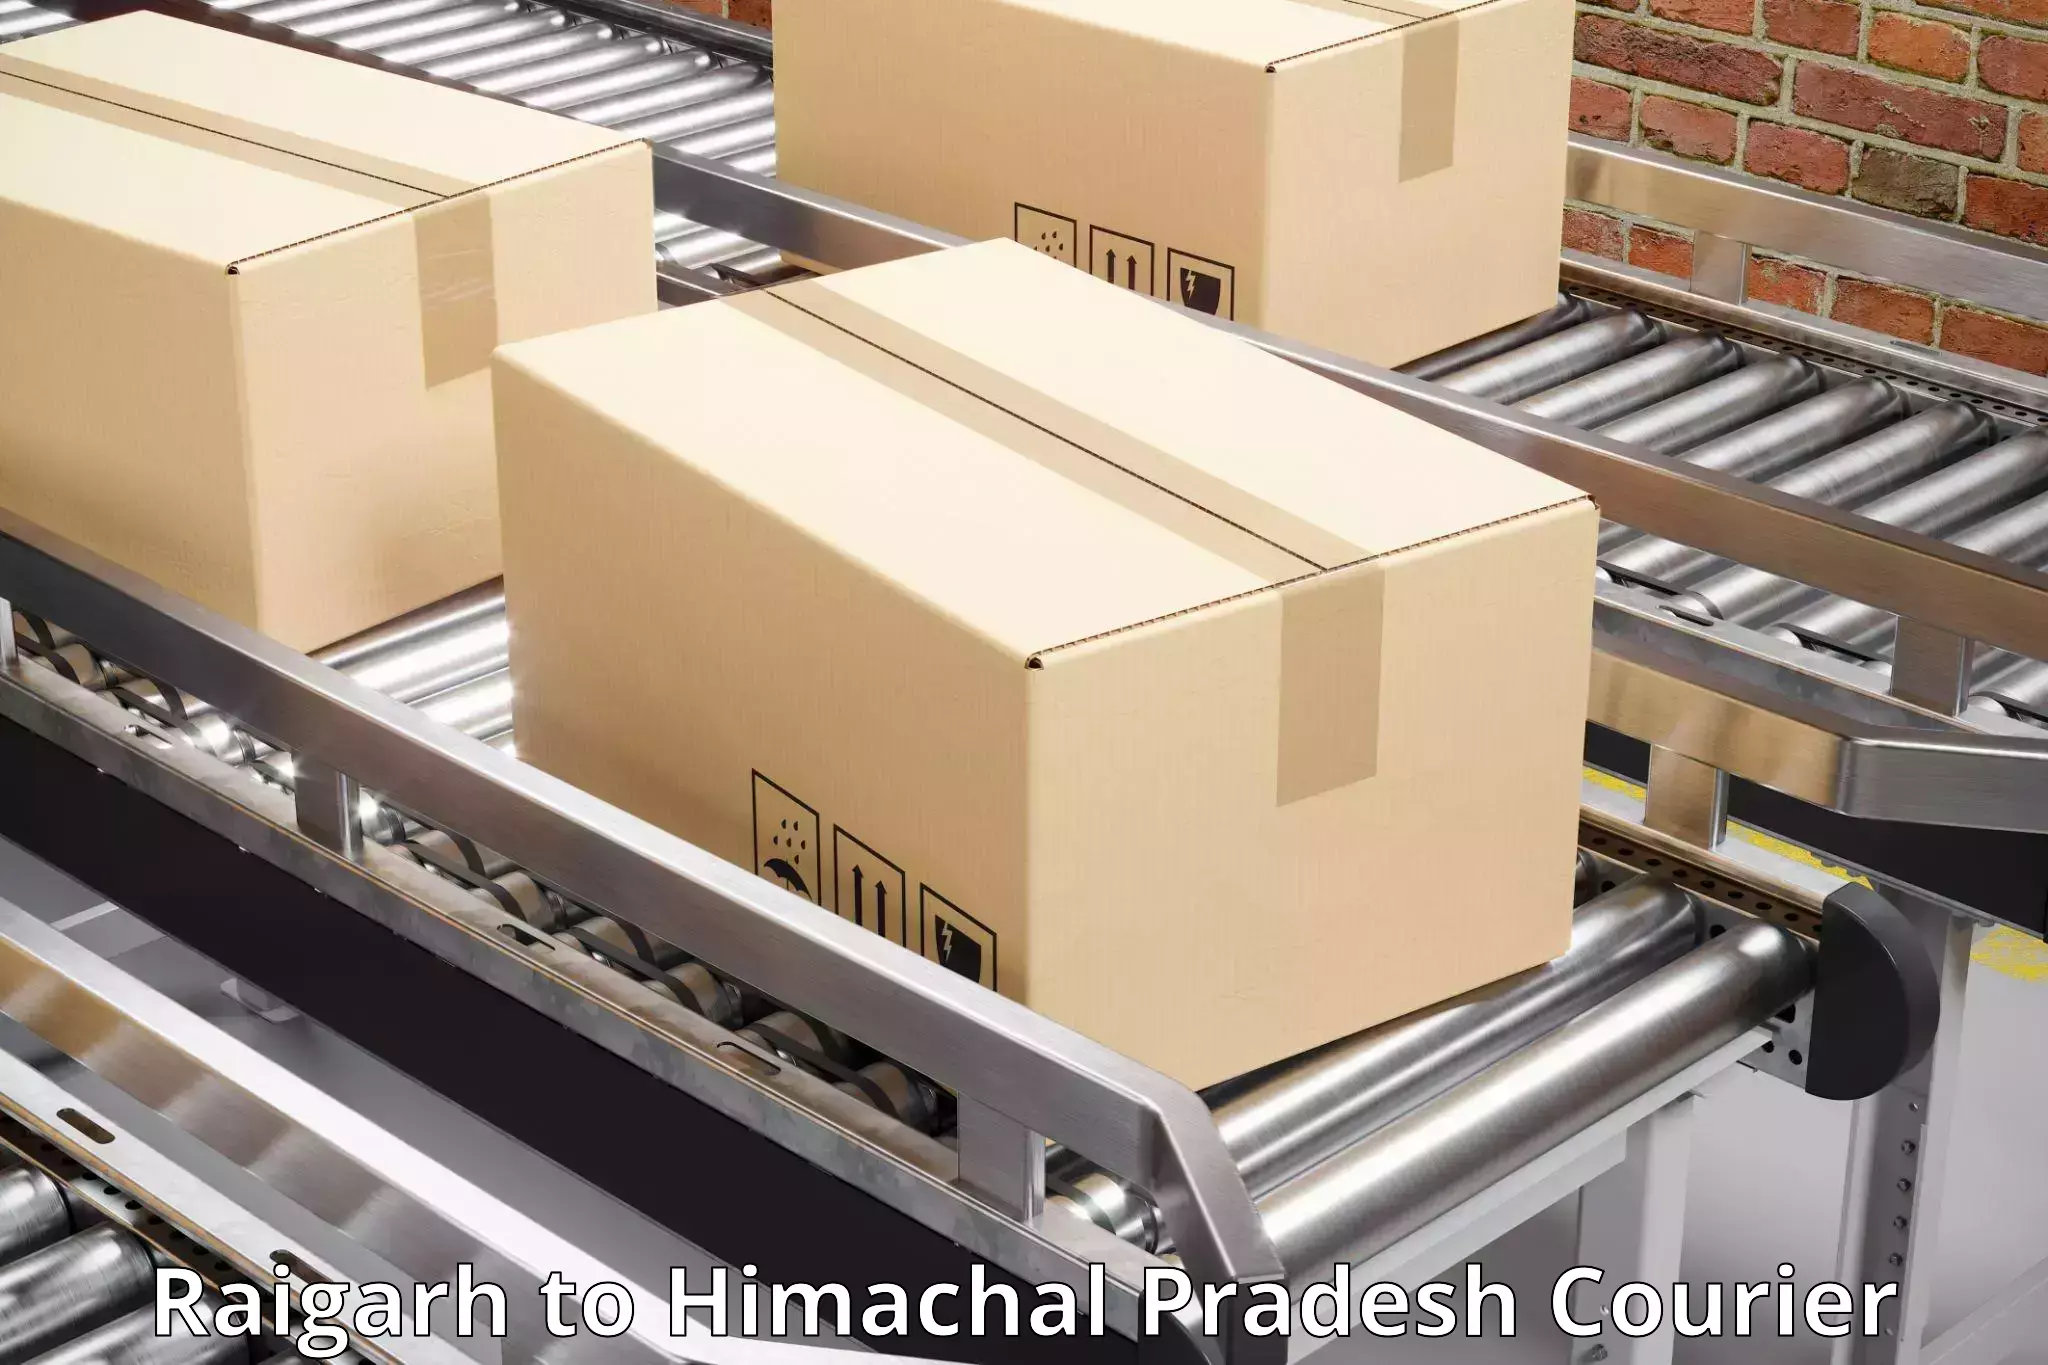 Modern courier technology Raigarh to Dheera